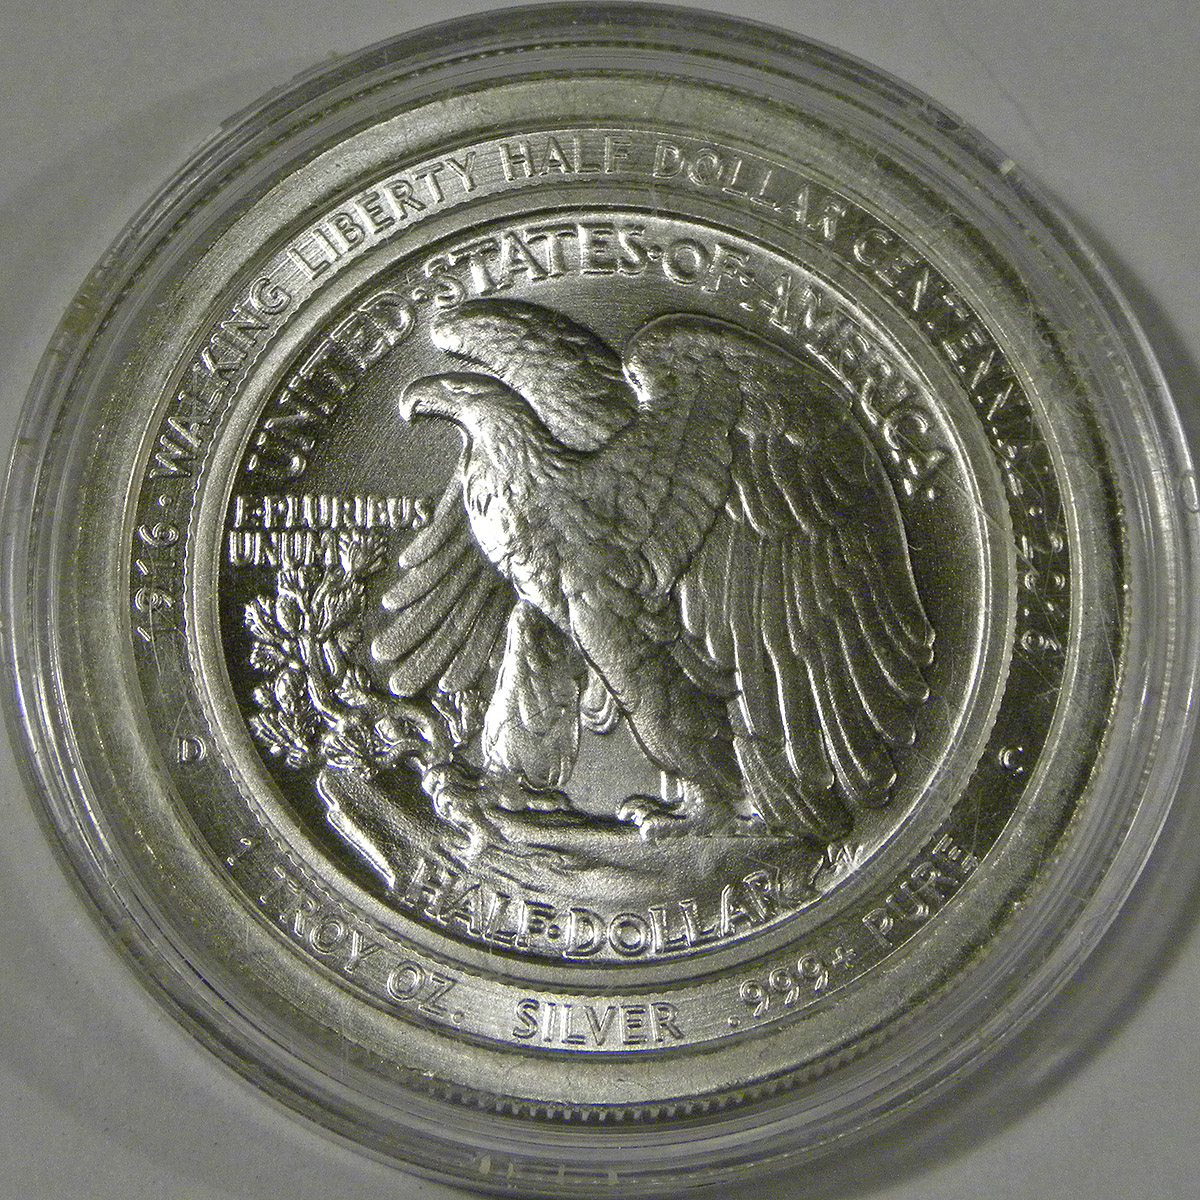 Walking Liberty Half Dollar Centennial silver round (reverse)